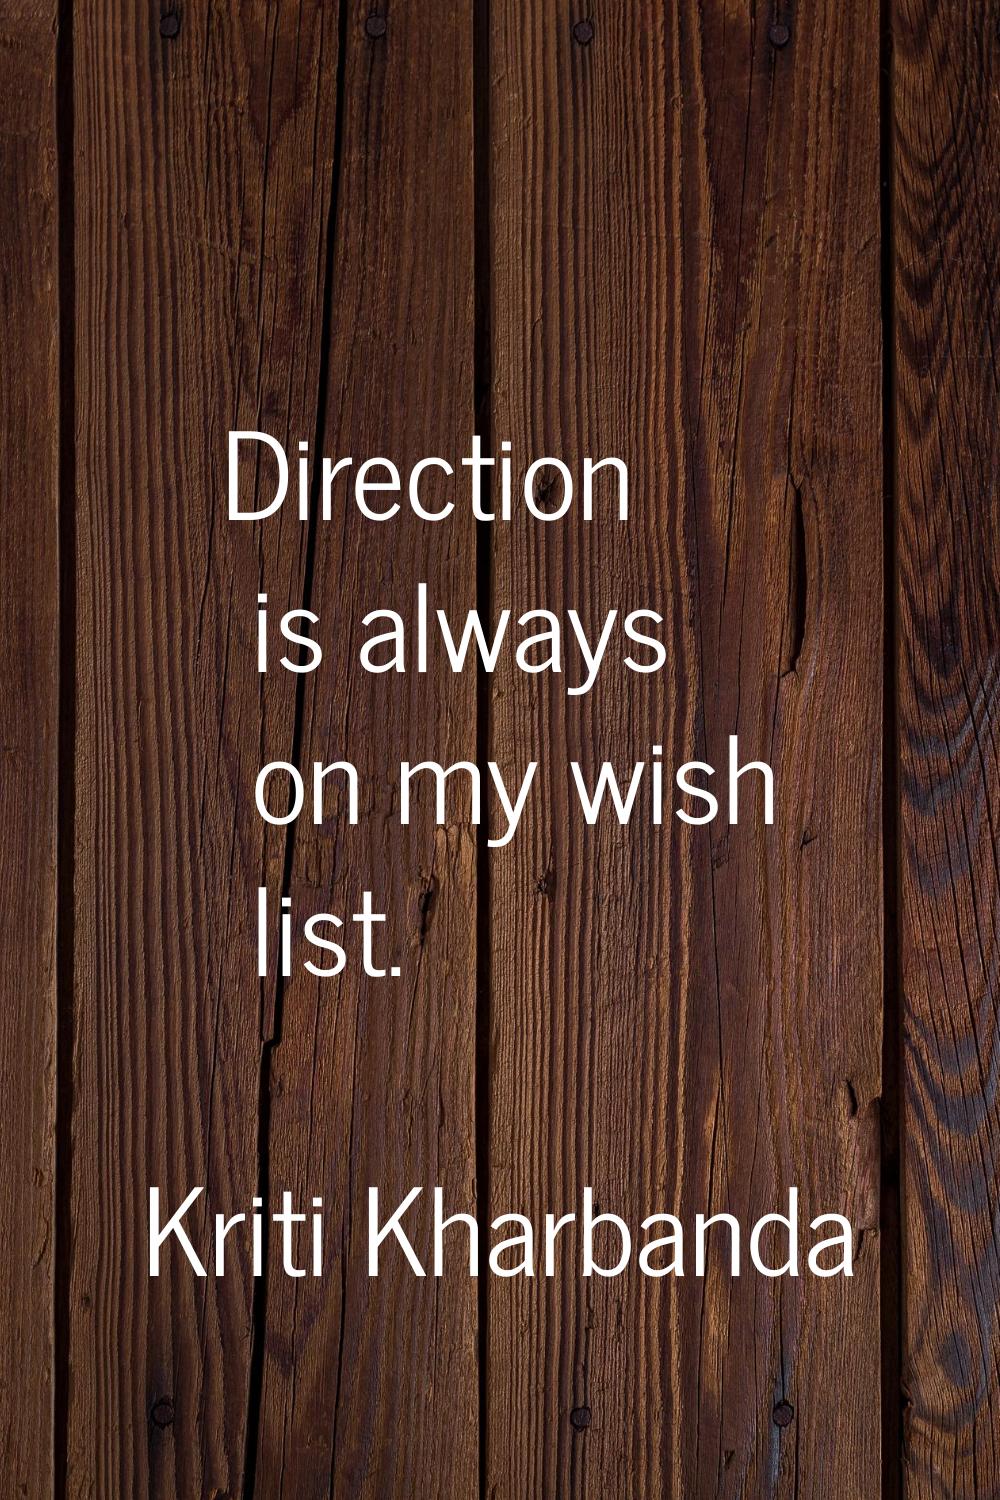 Direction is always on my wish list.